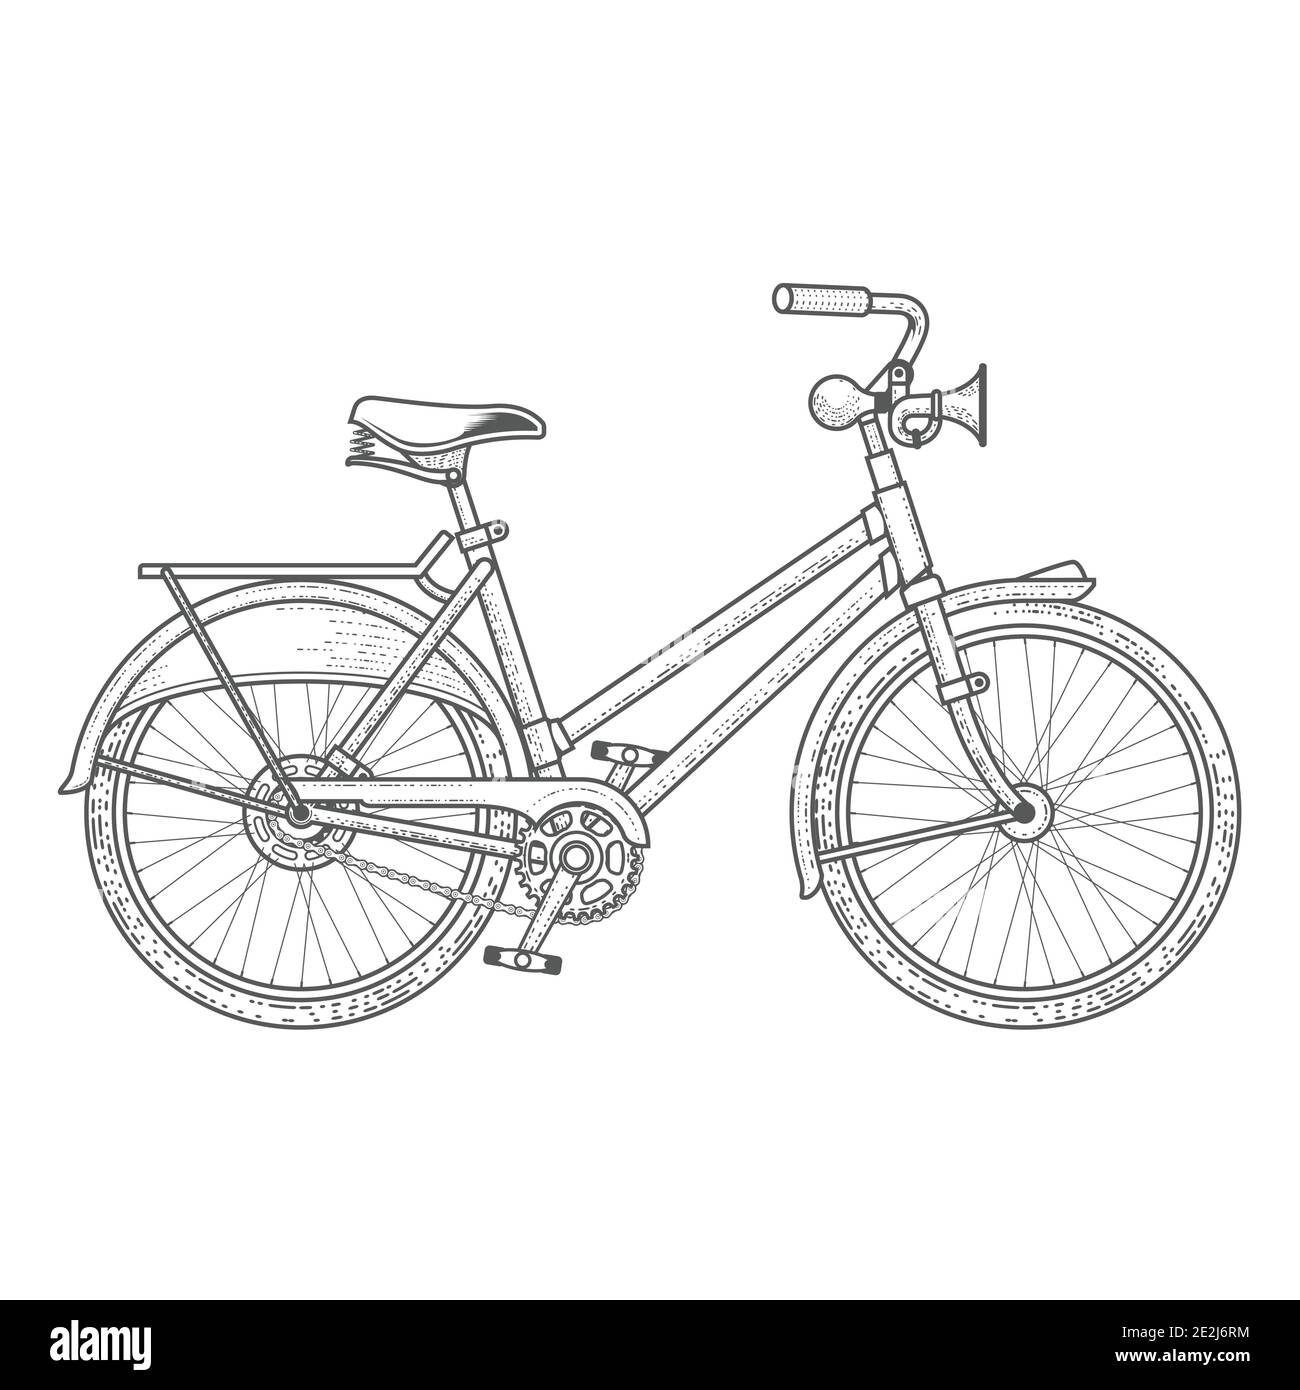 City Fahrrad im Grafikstil, Casual Bike mit Hand Honk, Vektor Stock Vektor